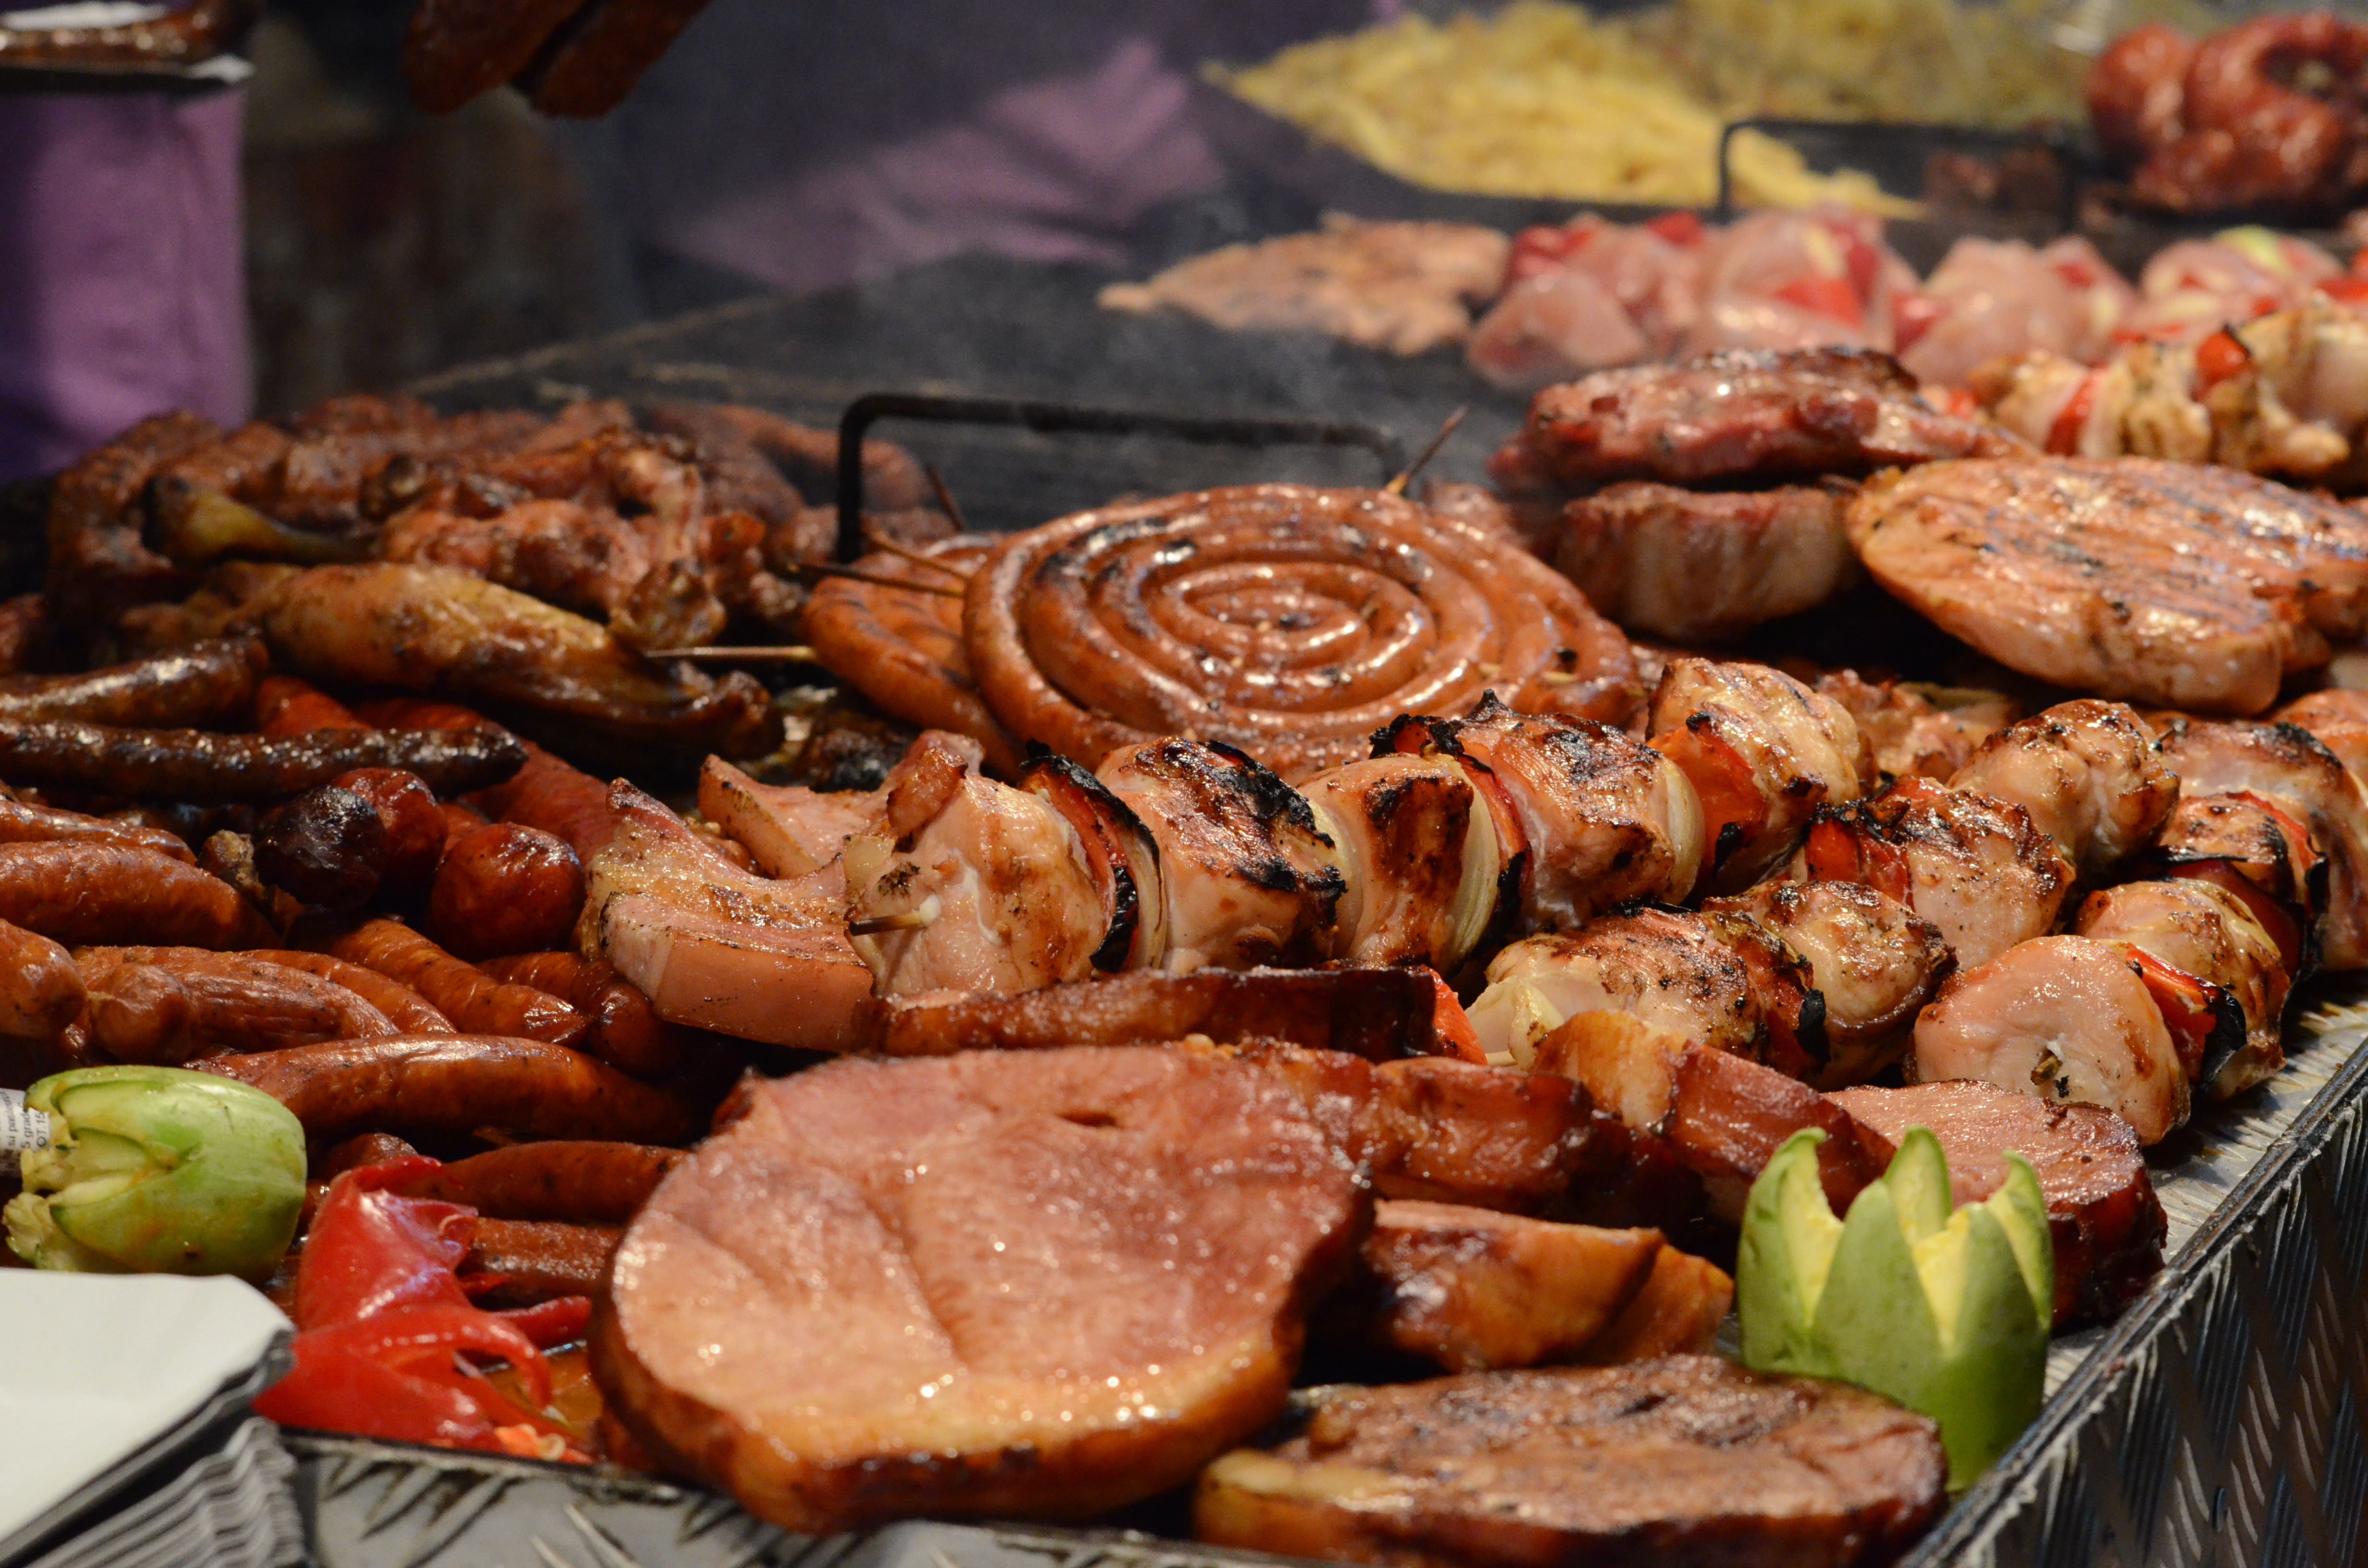 File:Barbecue food in Romania.JPG